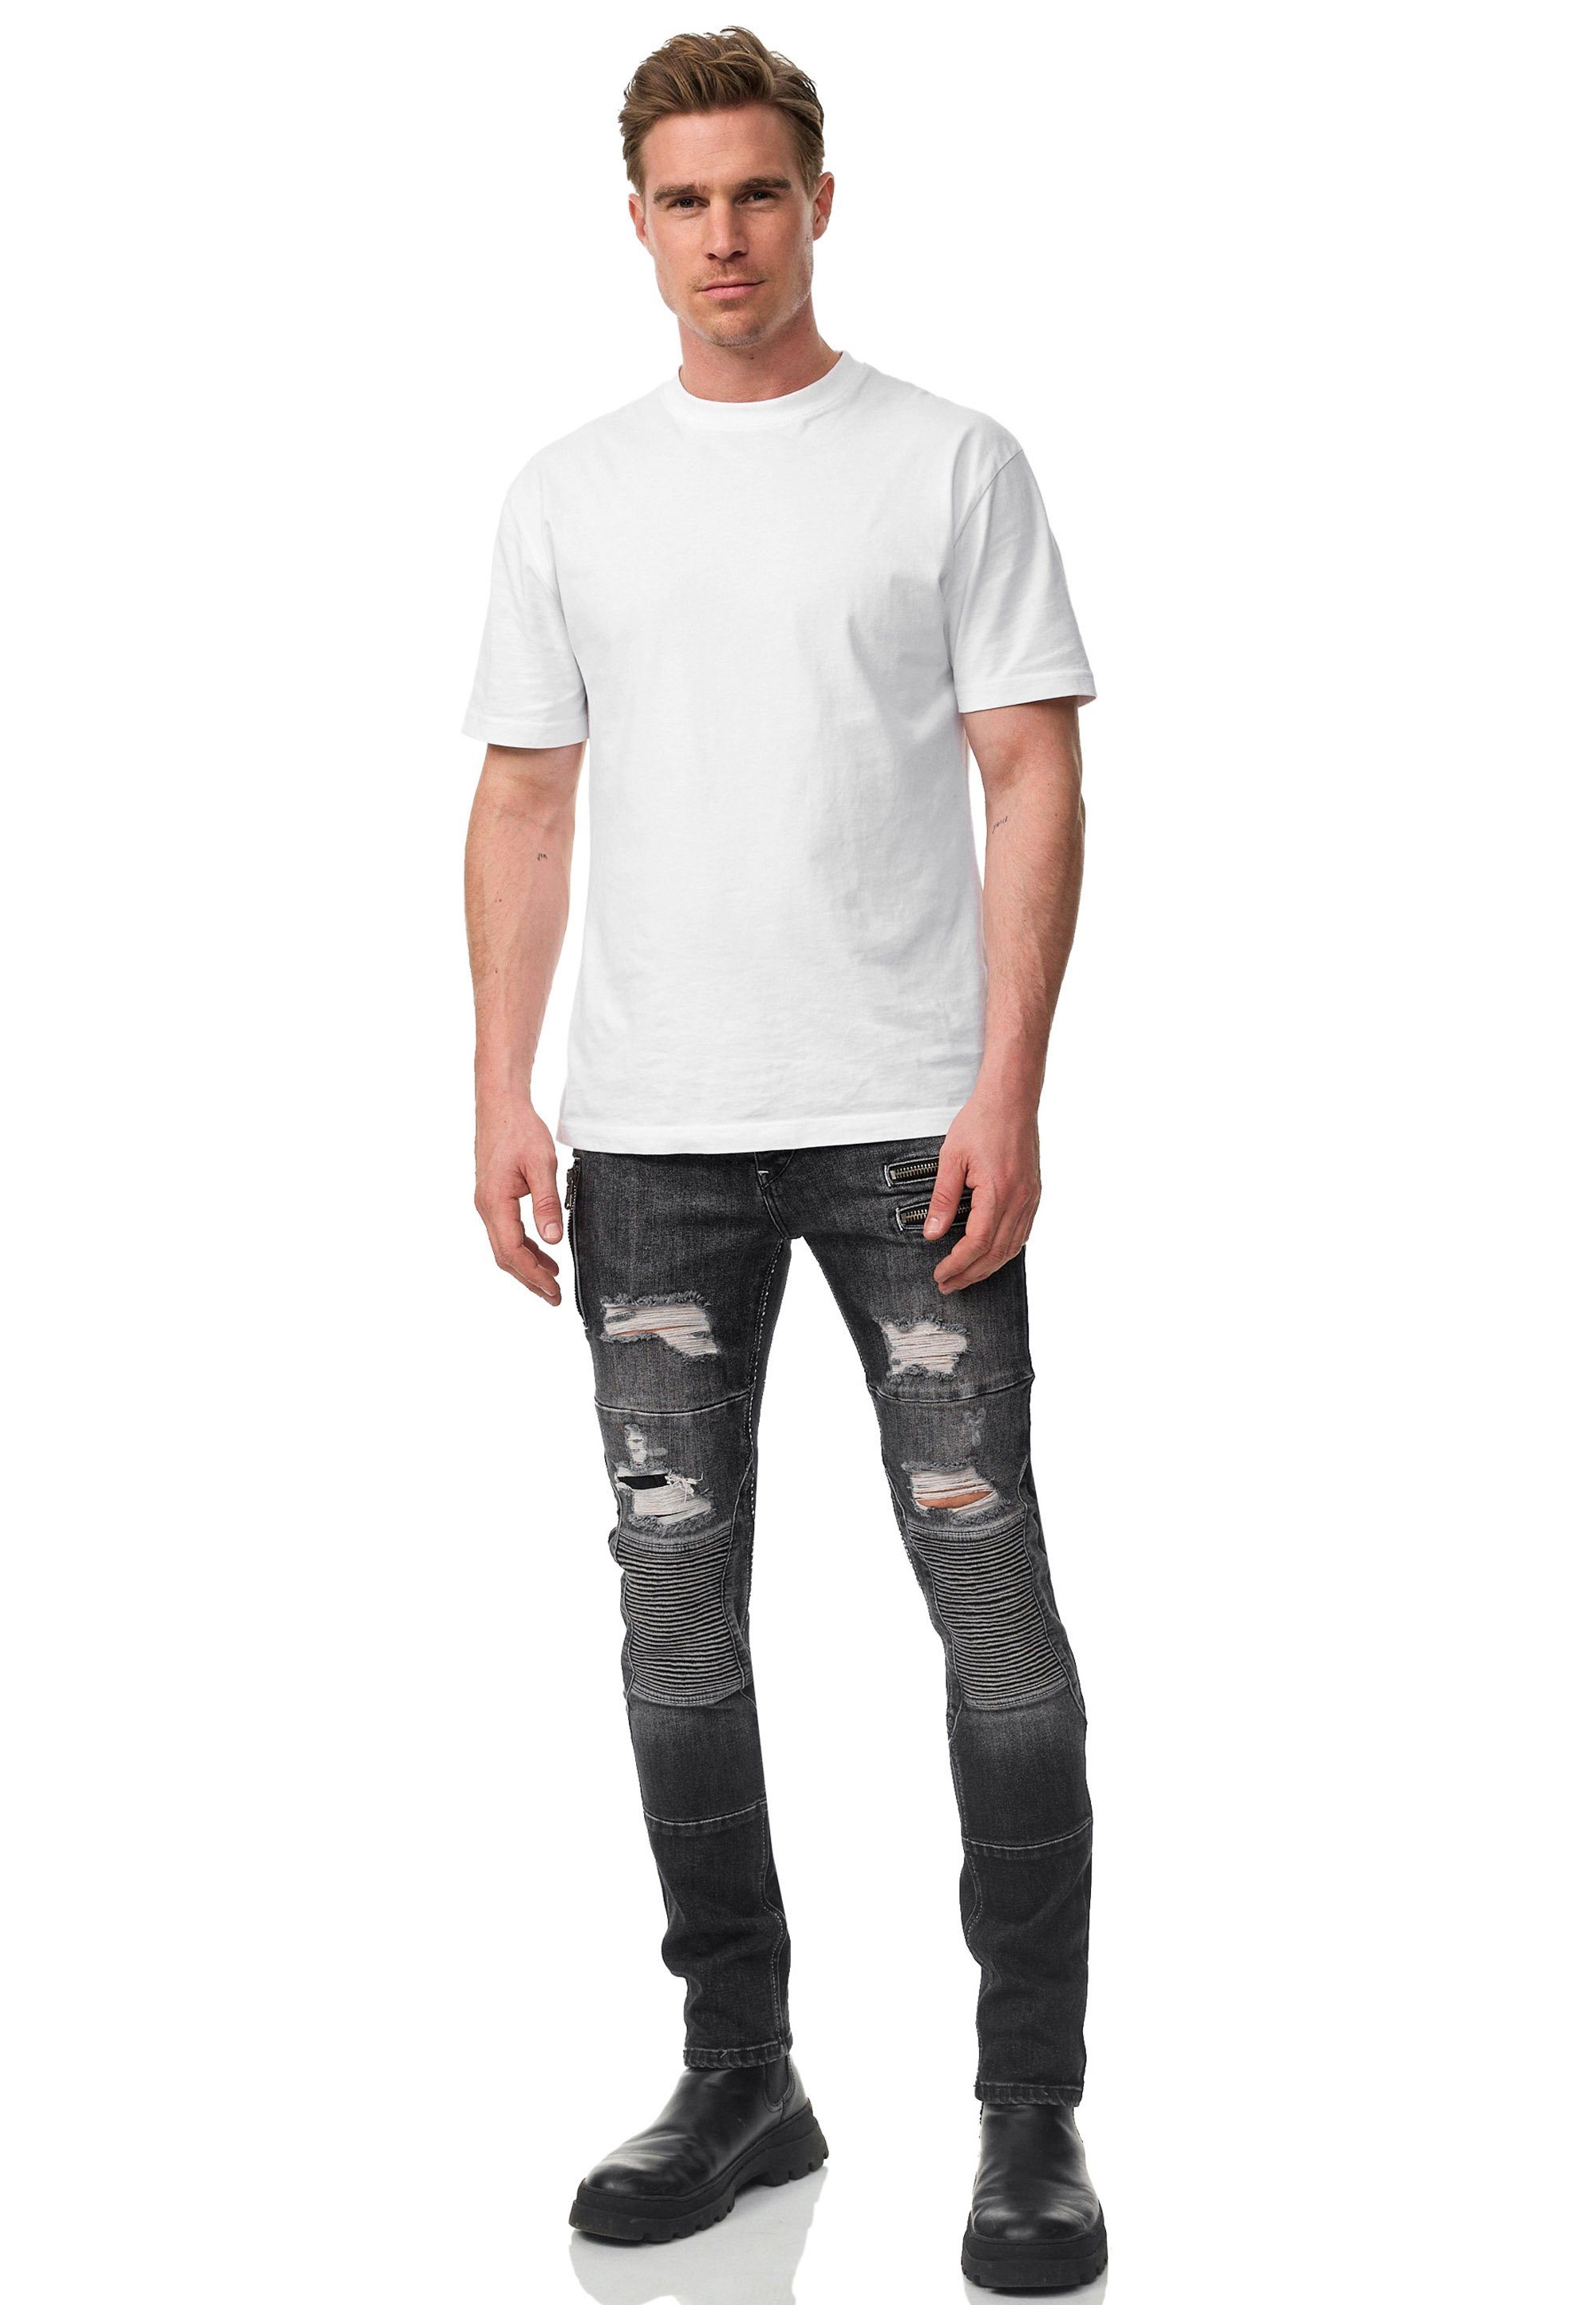 dunkelgrau Used-Look MISATO modischen Rusty im Neal Slim-fit-Jeans